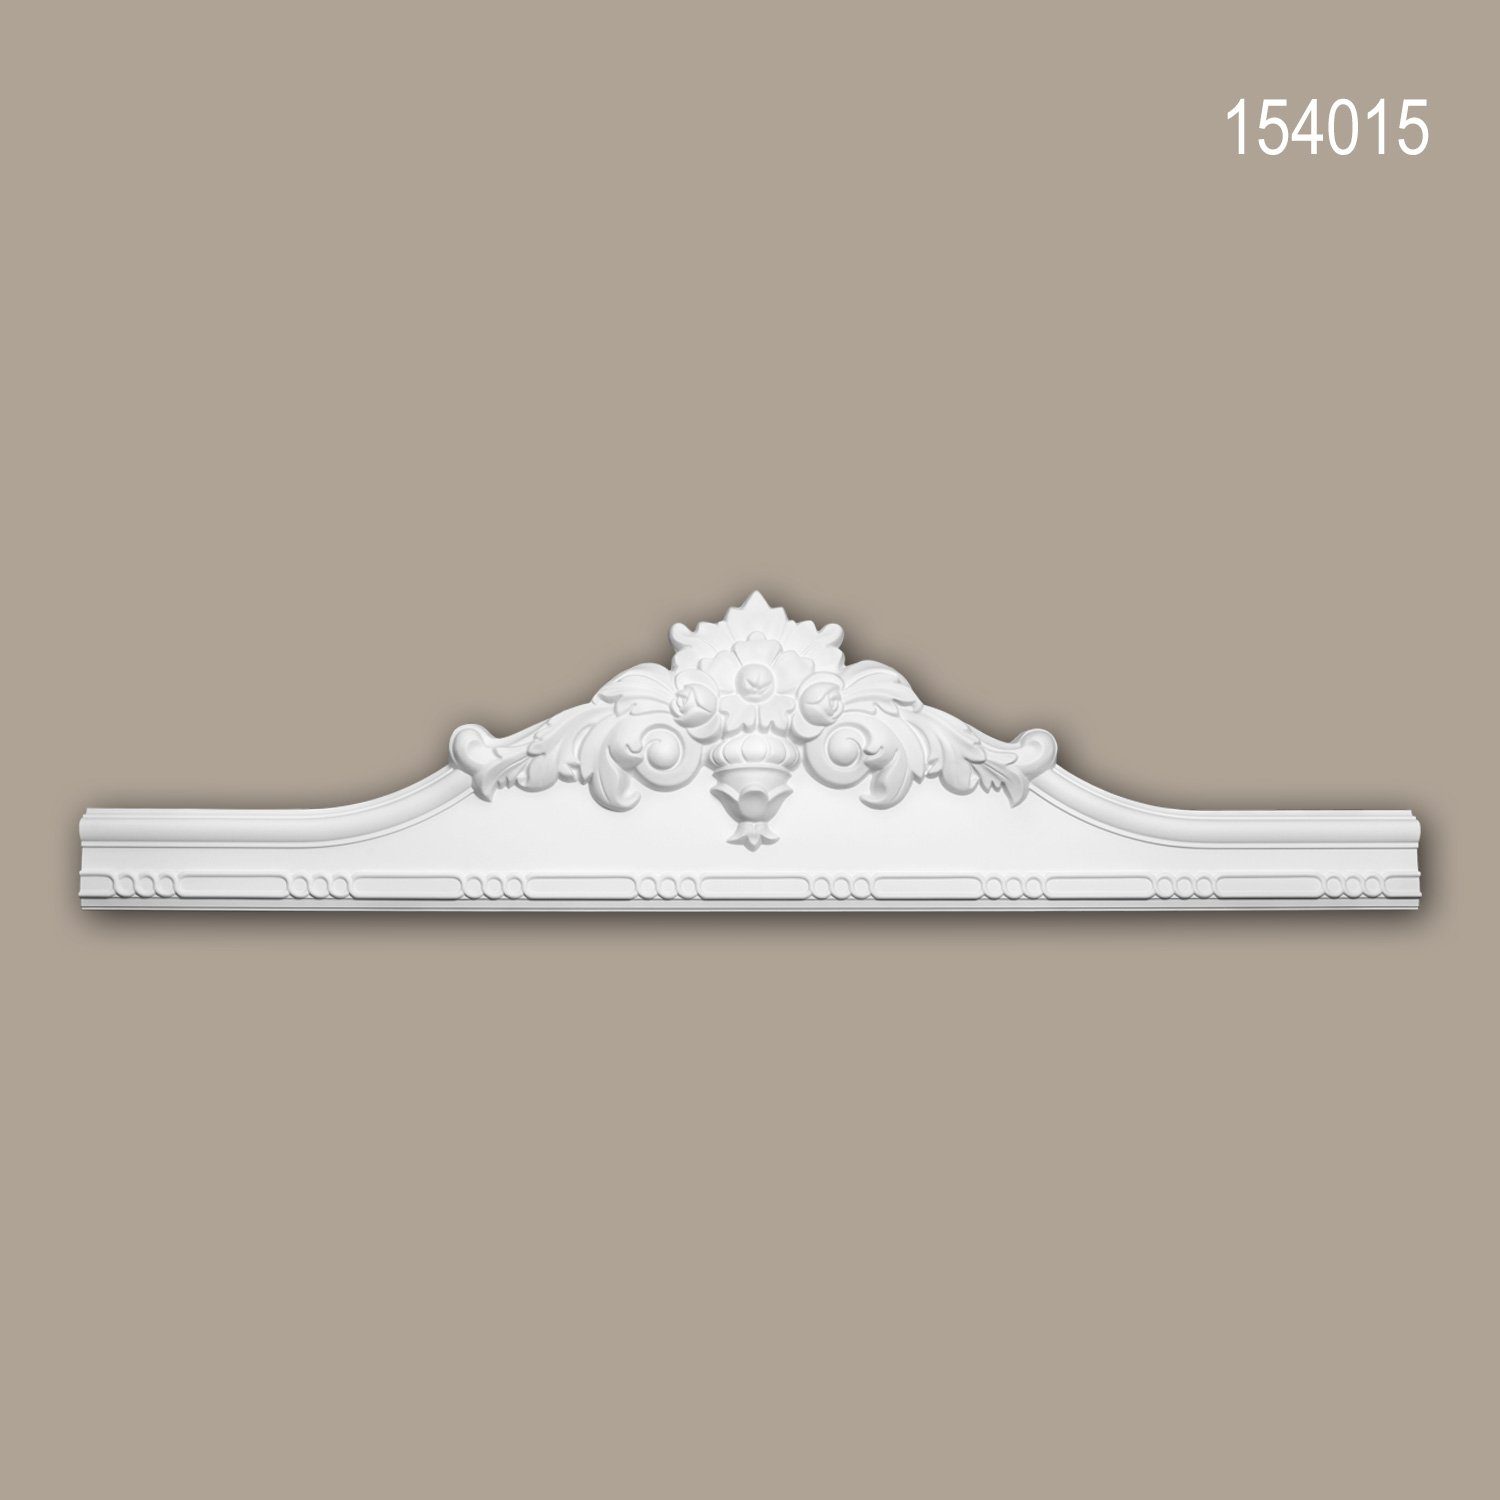 Profhome Wanddekoobjekt 154015 (Pediment, 1 St., Türaufsatz, Schmuckelement, Verzierung, Türumrandung), weiß, vorgrundiert, Stil: Rokoko / Barock